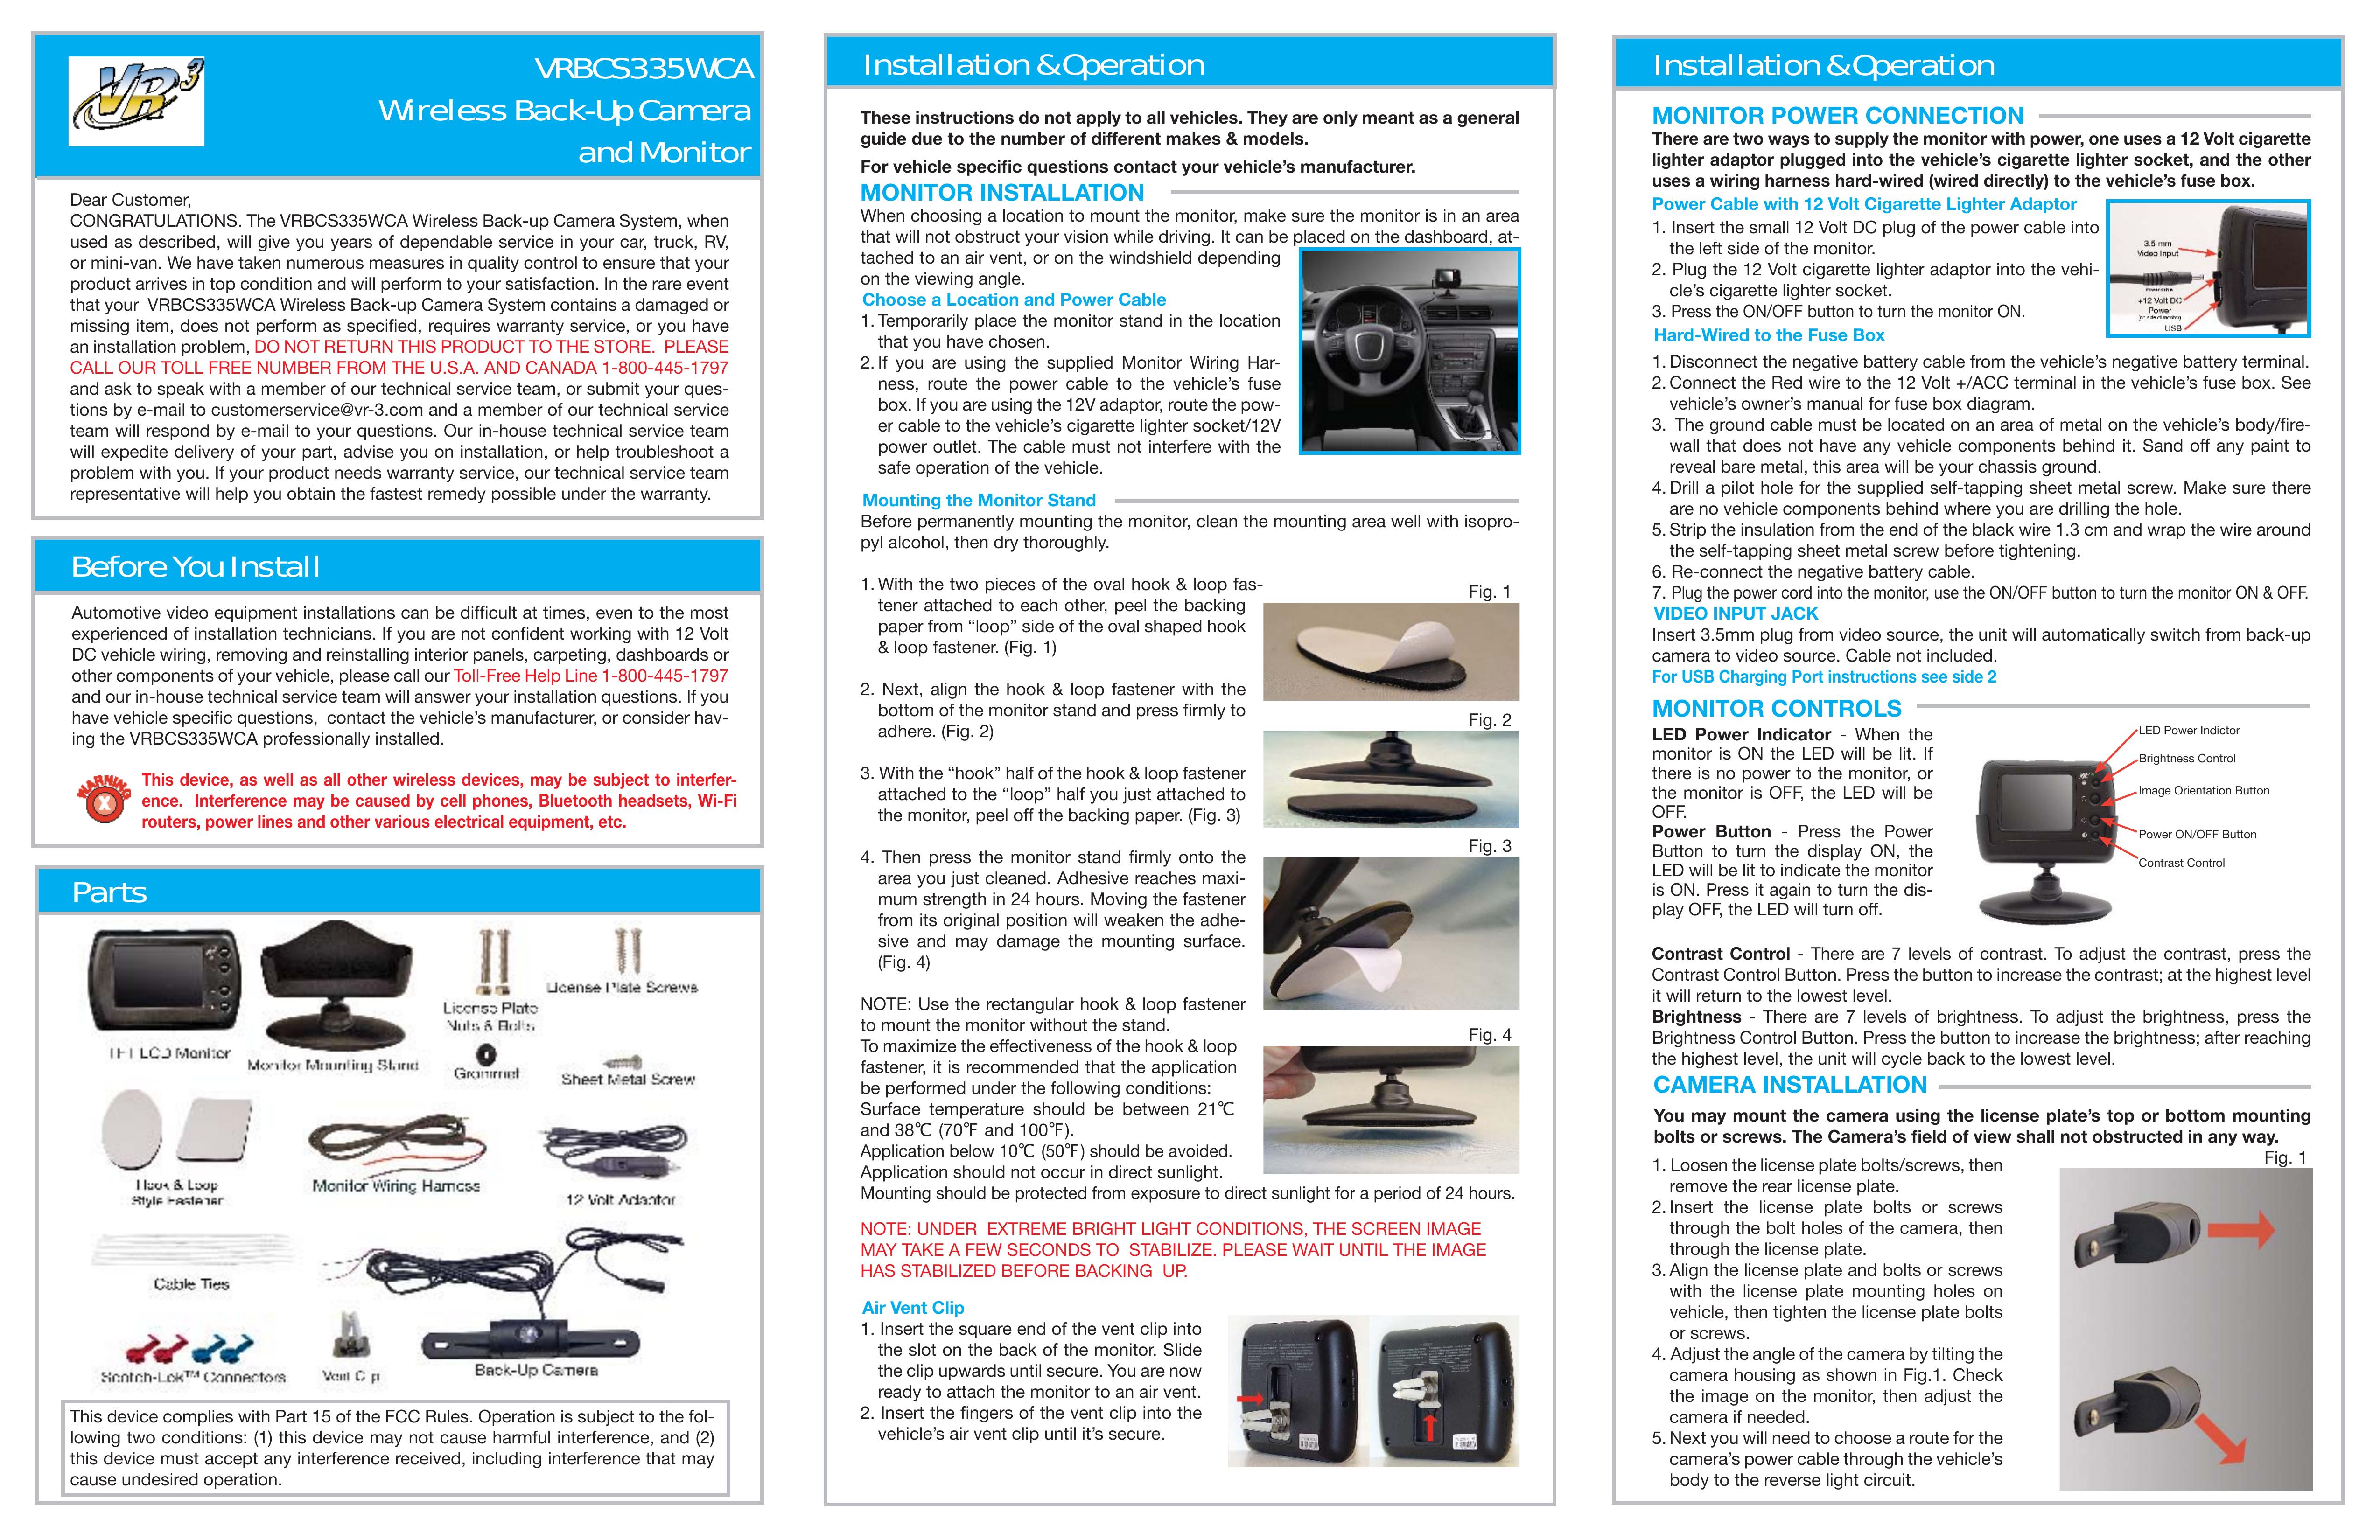 Roadmaster VRBCS335WCA Security Camera User Manual